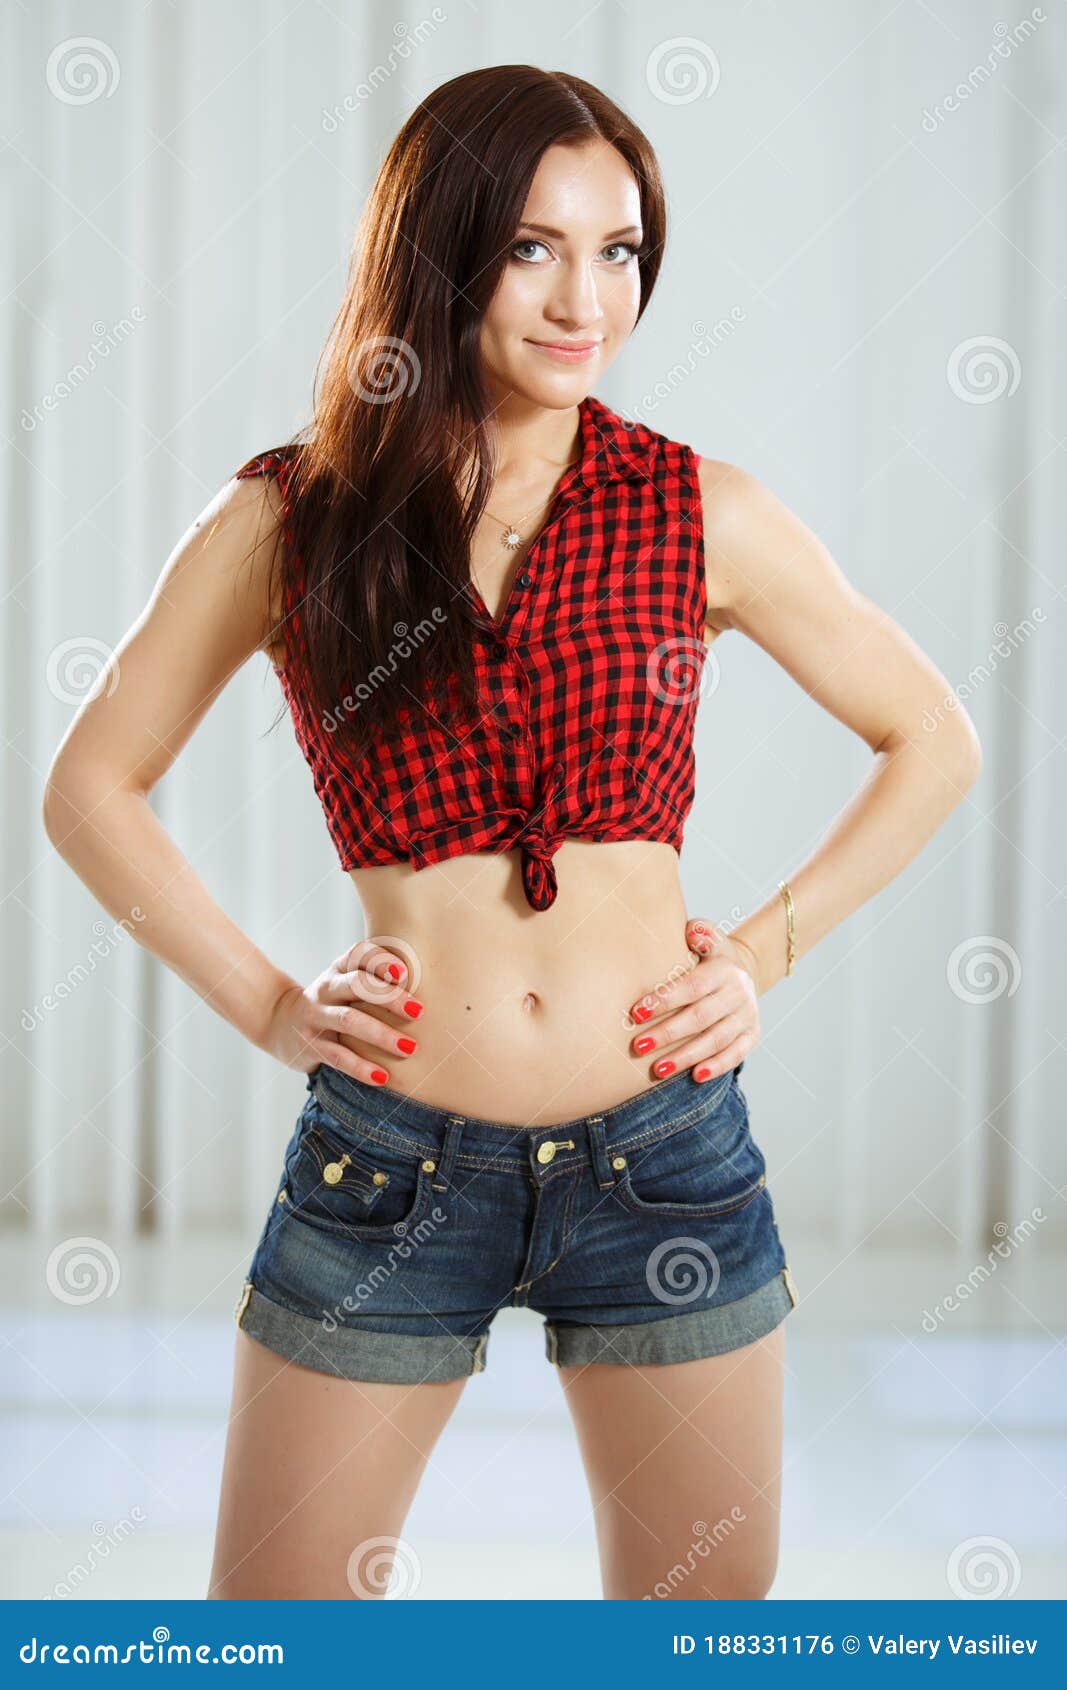 sexy girl in jean shorts